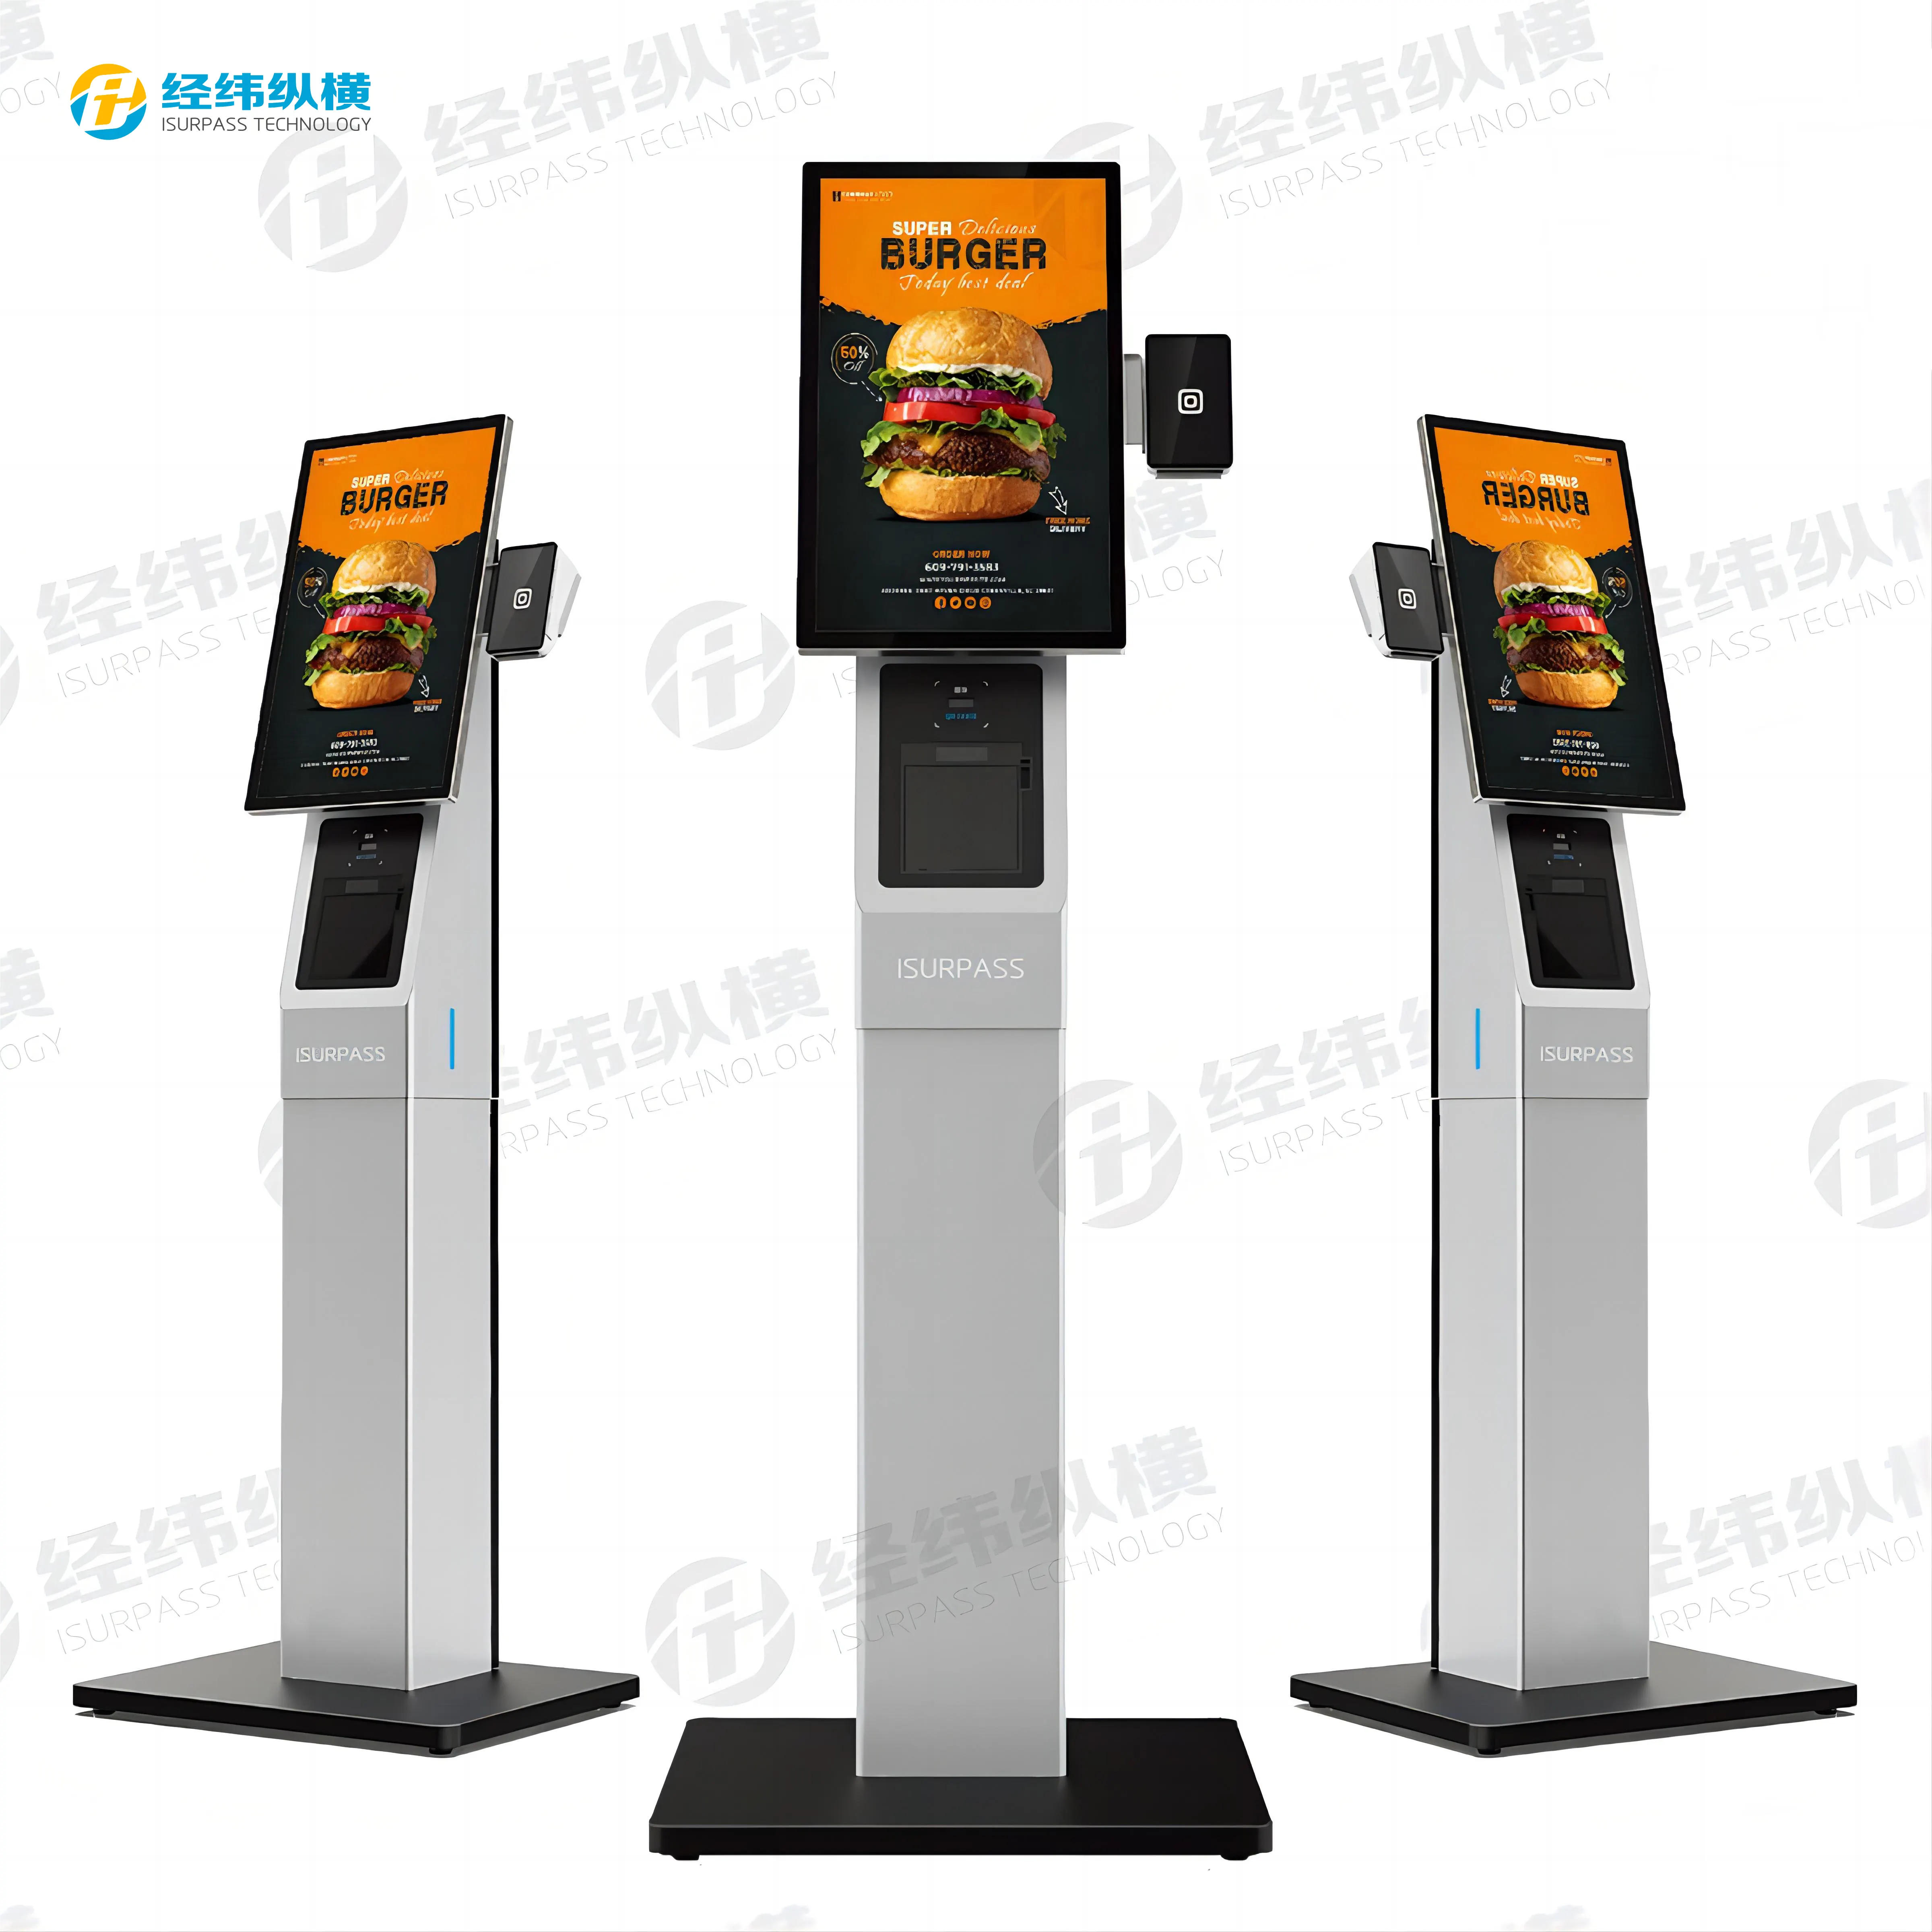 ISURPASS Restaurant Bestell maschine Restaurant Selbstbedienung Android Fast Food Kiosk Selbst kiosk